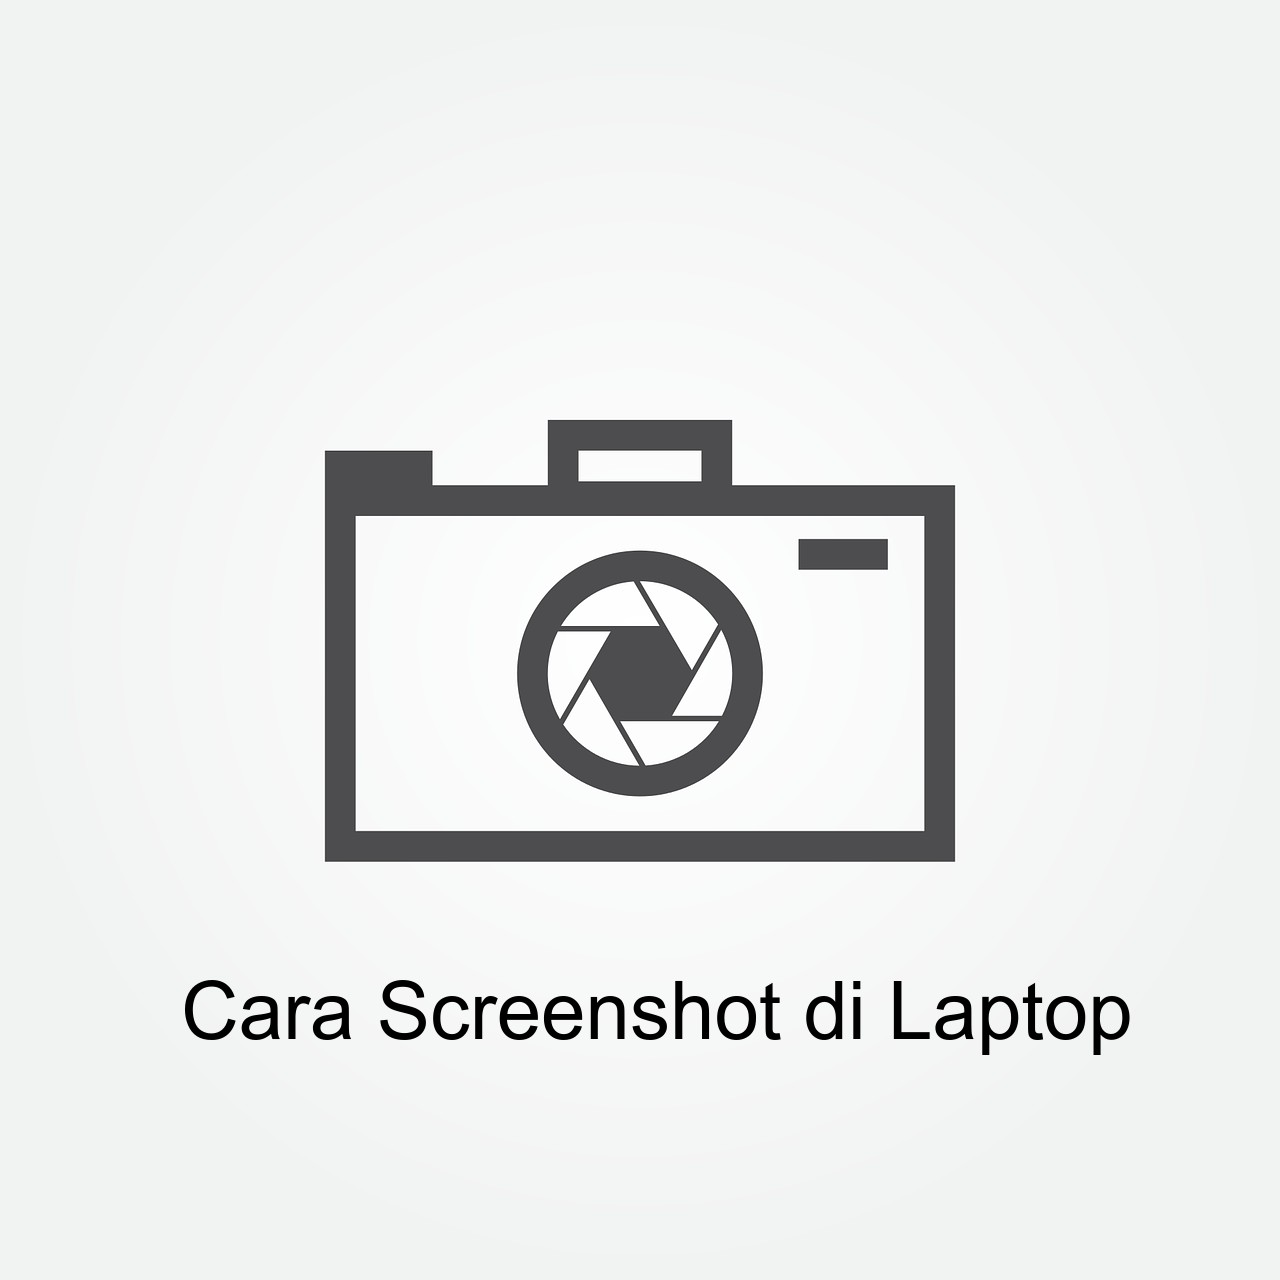 Cara Screenshot Laptop Dell Windows 10. 6 Cara Screenshot di Laptop & PC (Asus, Dell, HP, Lenovo, Dll)